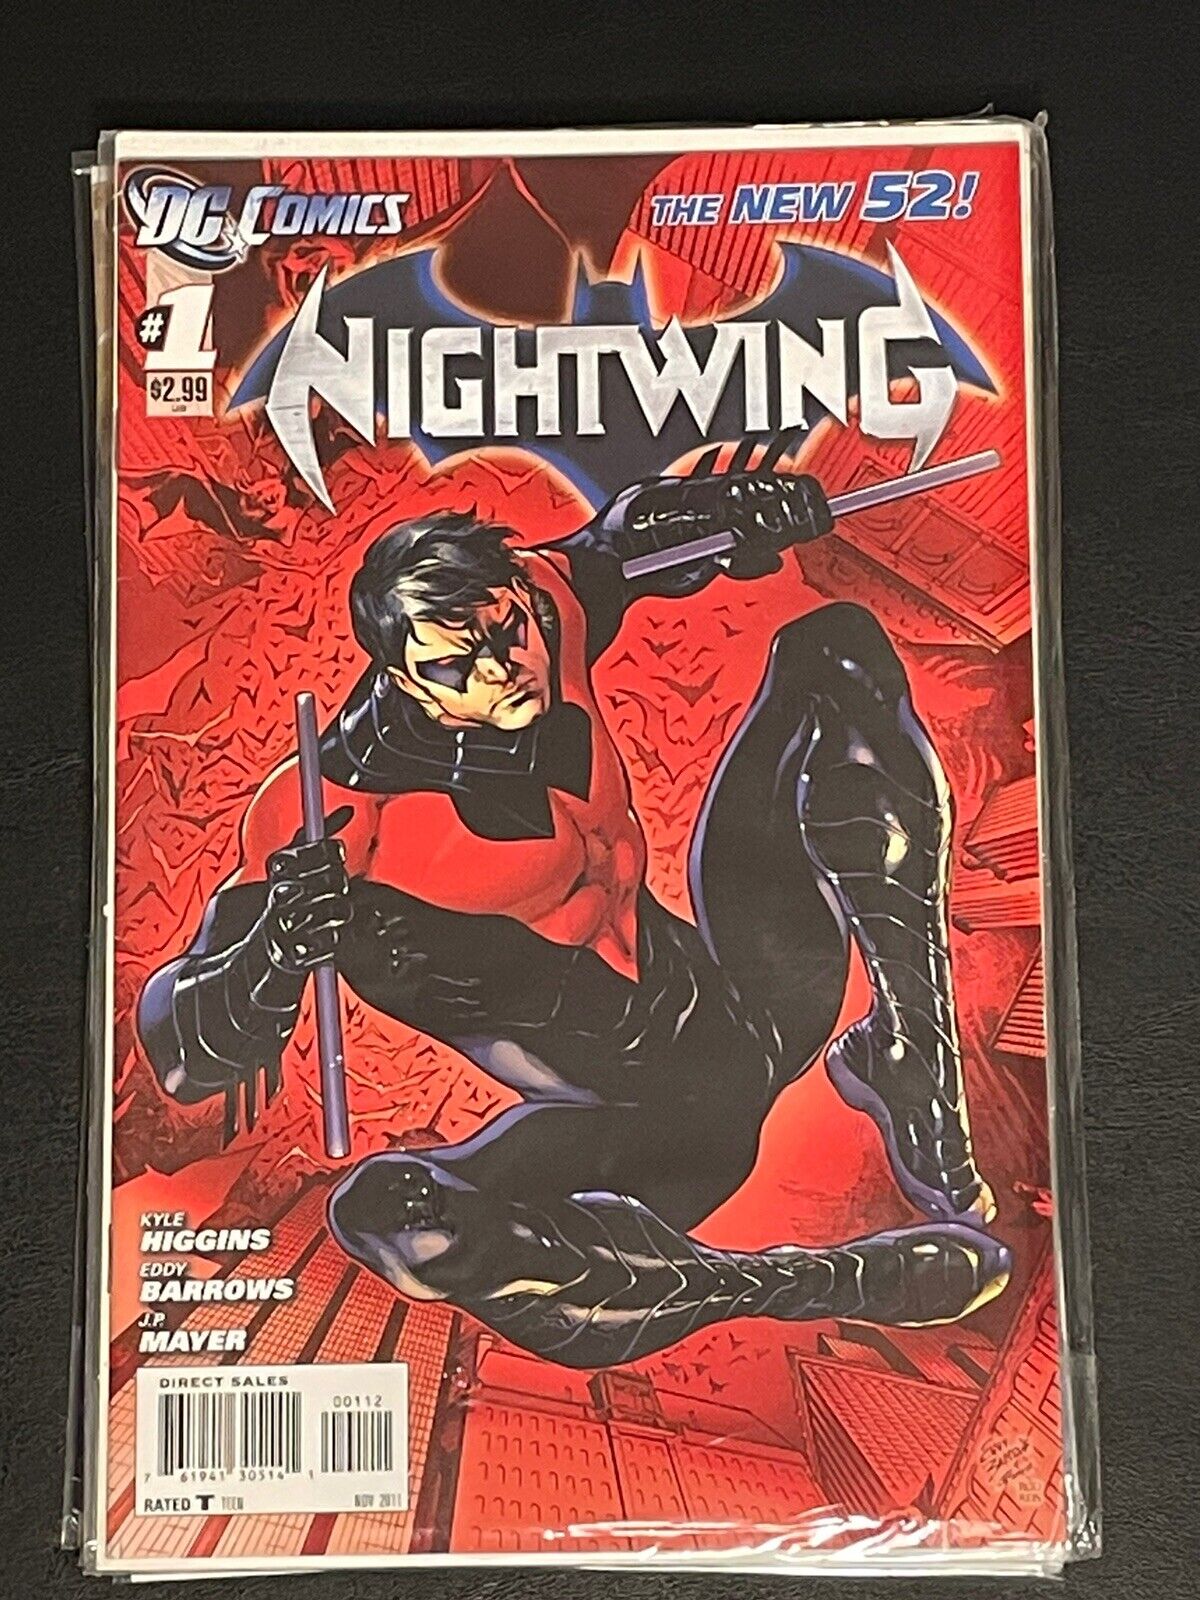 Nightwing #1 (DC Comics December 2012)